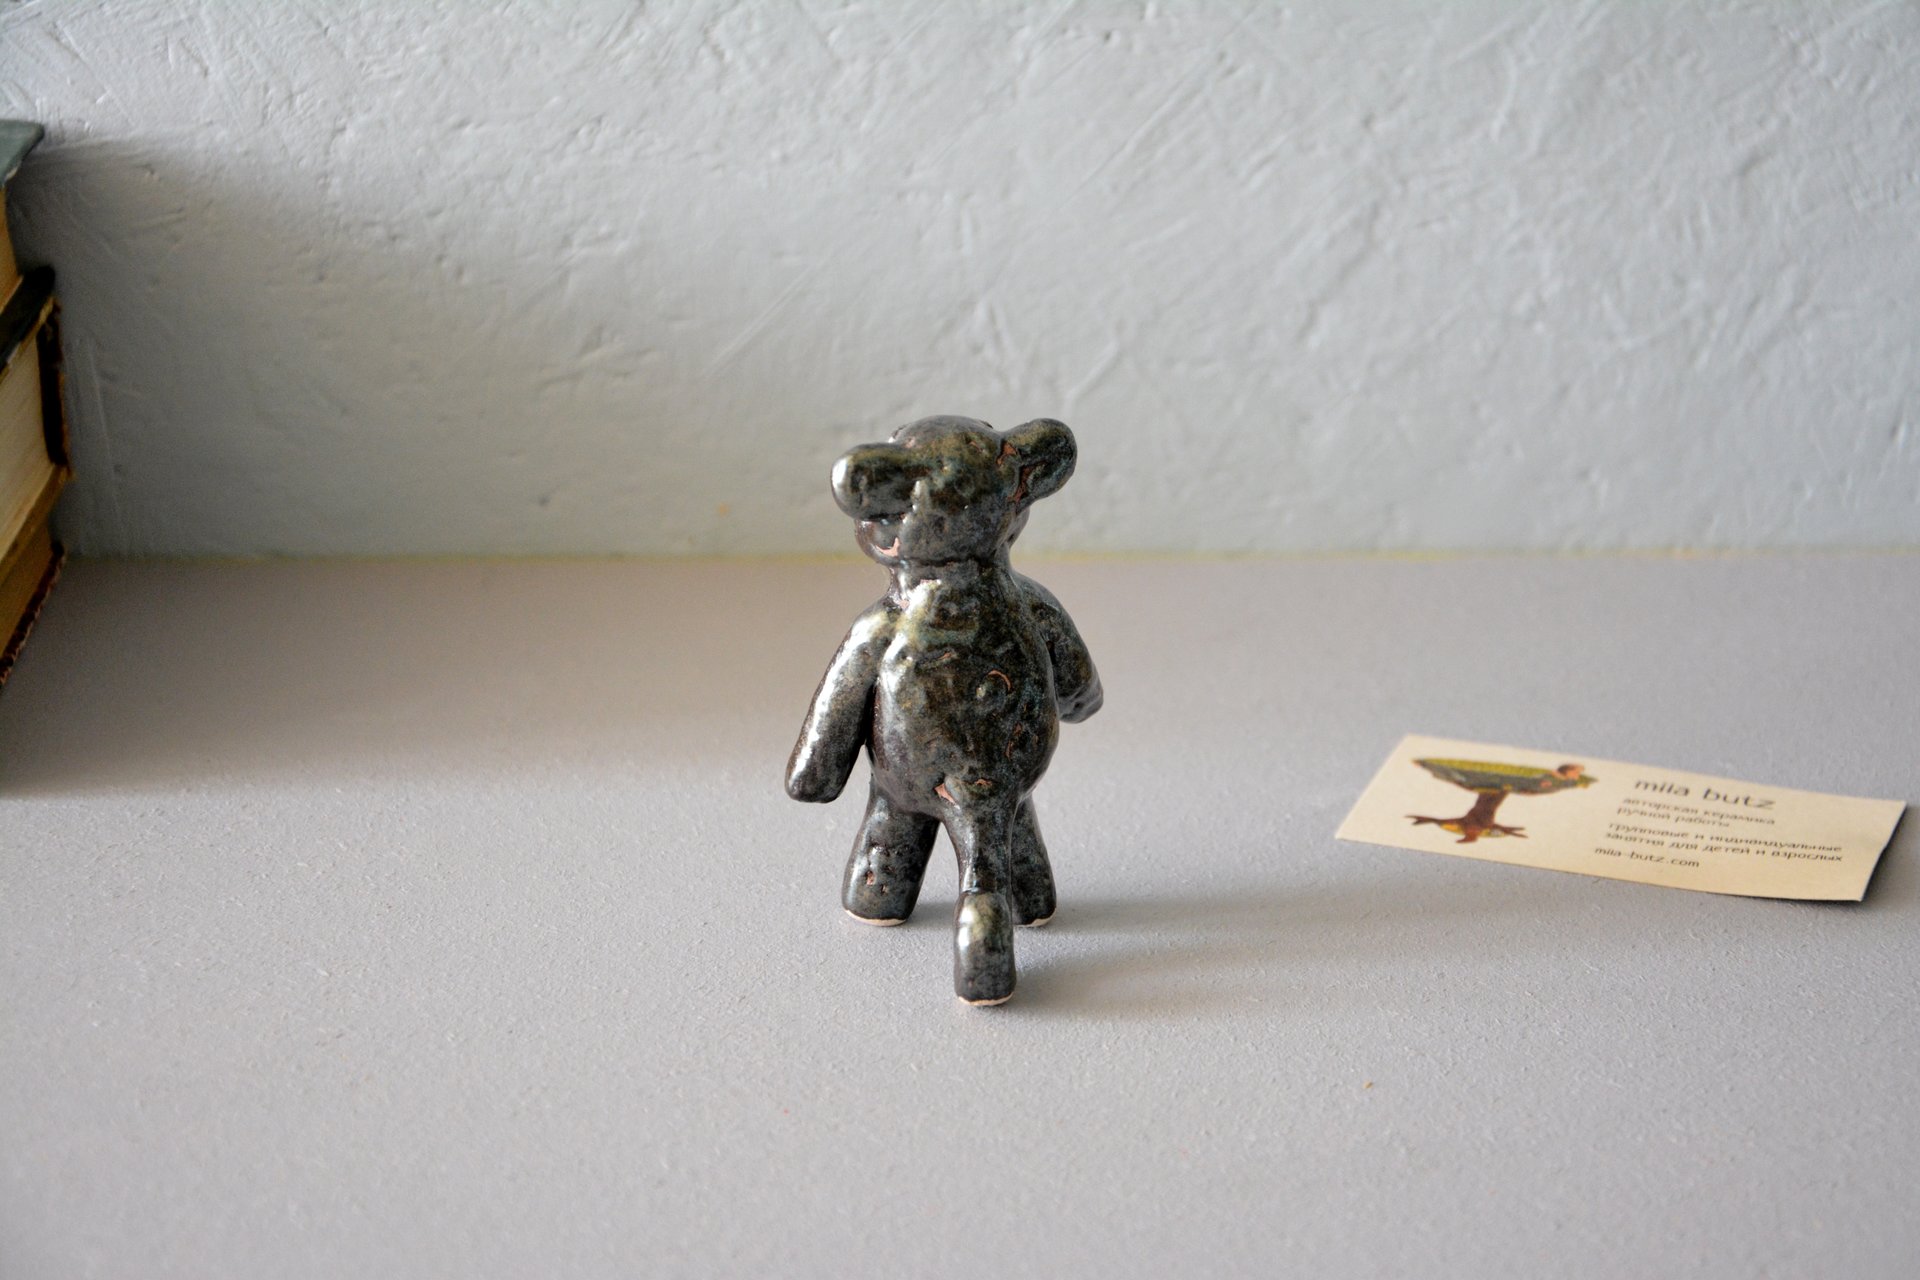 Robot — Monkeys - Animals and birds, height - 9 cm, photo 4 of 4.